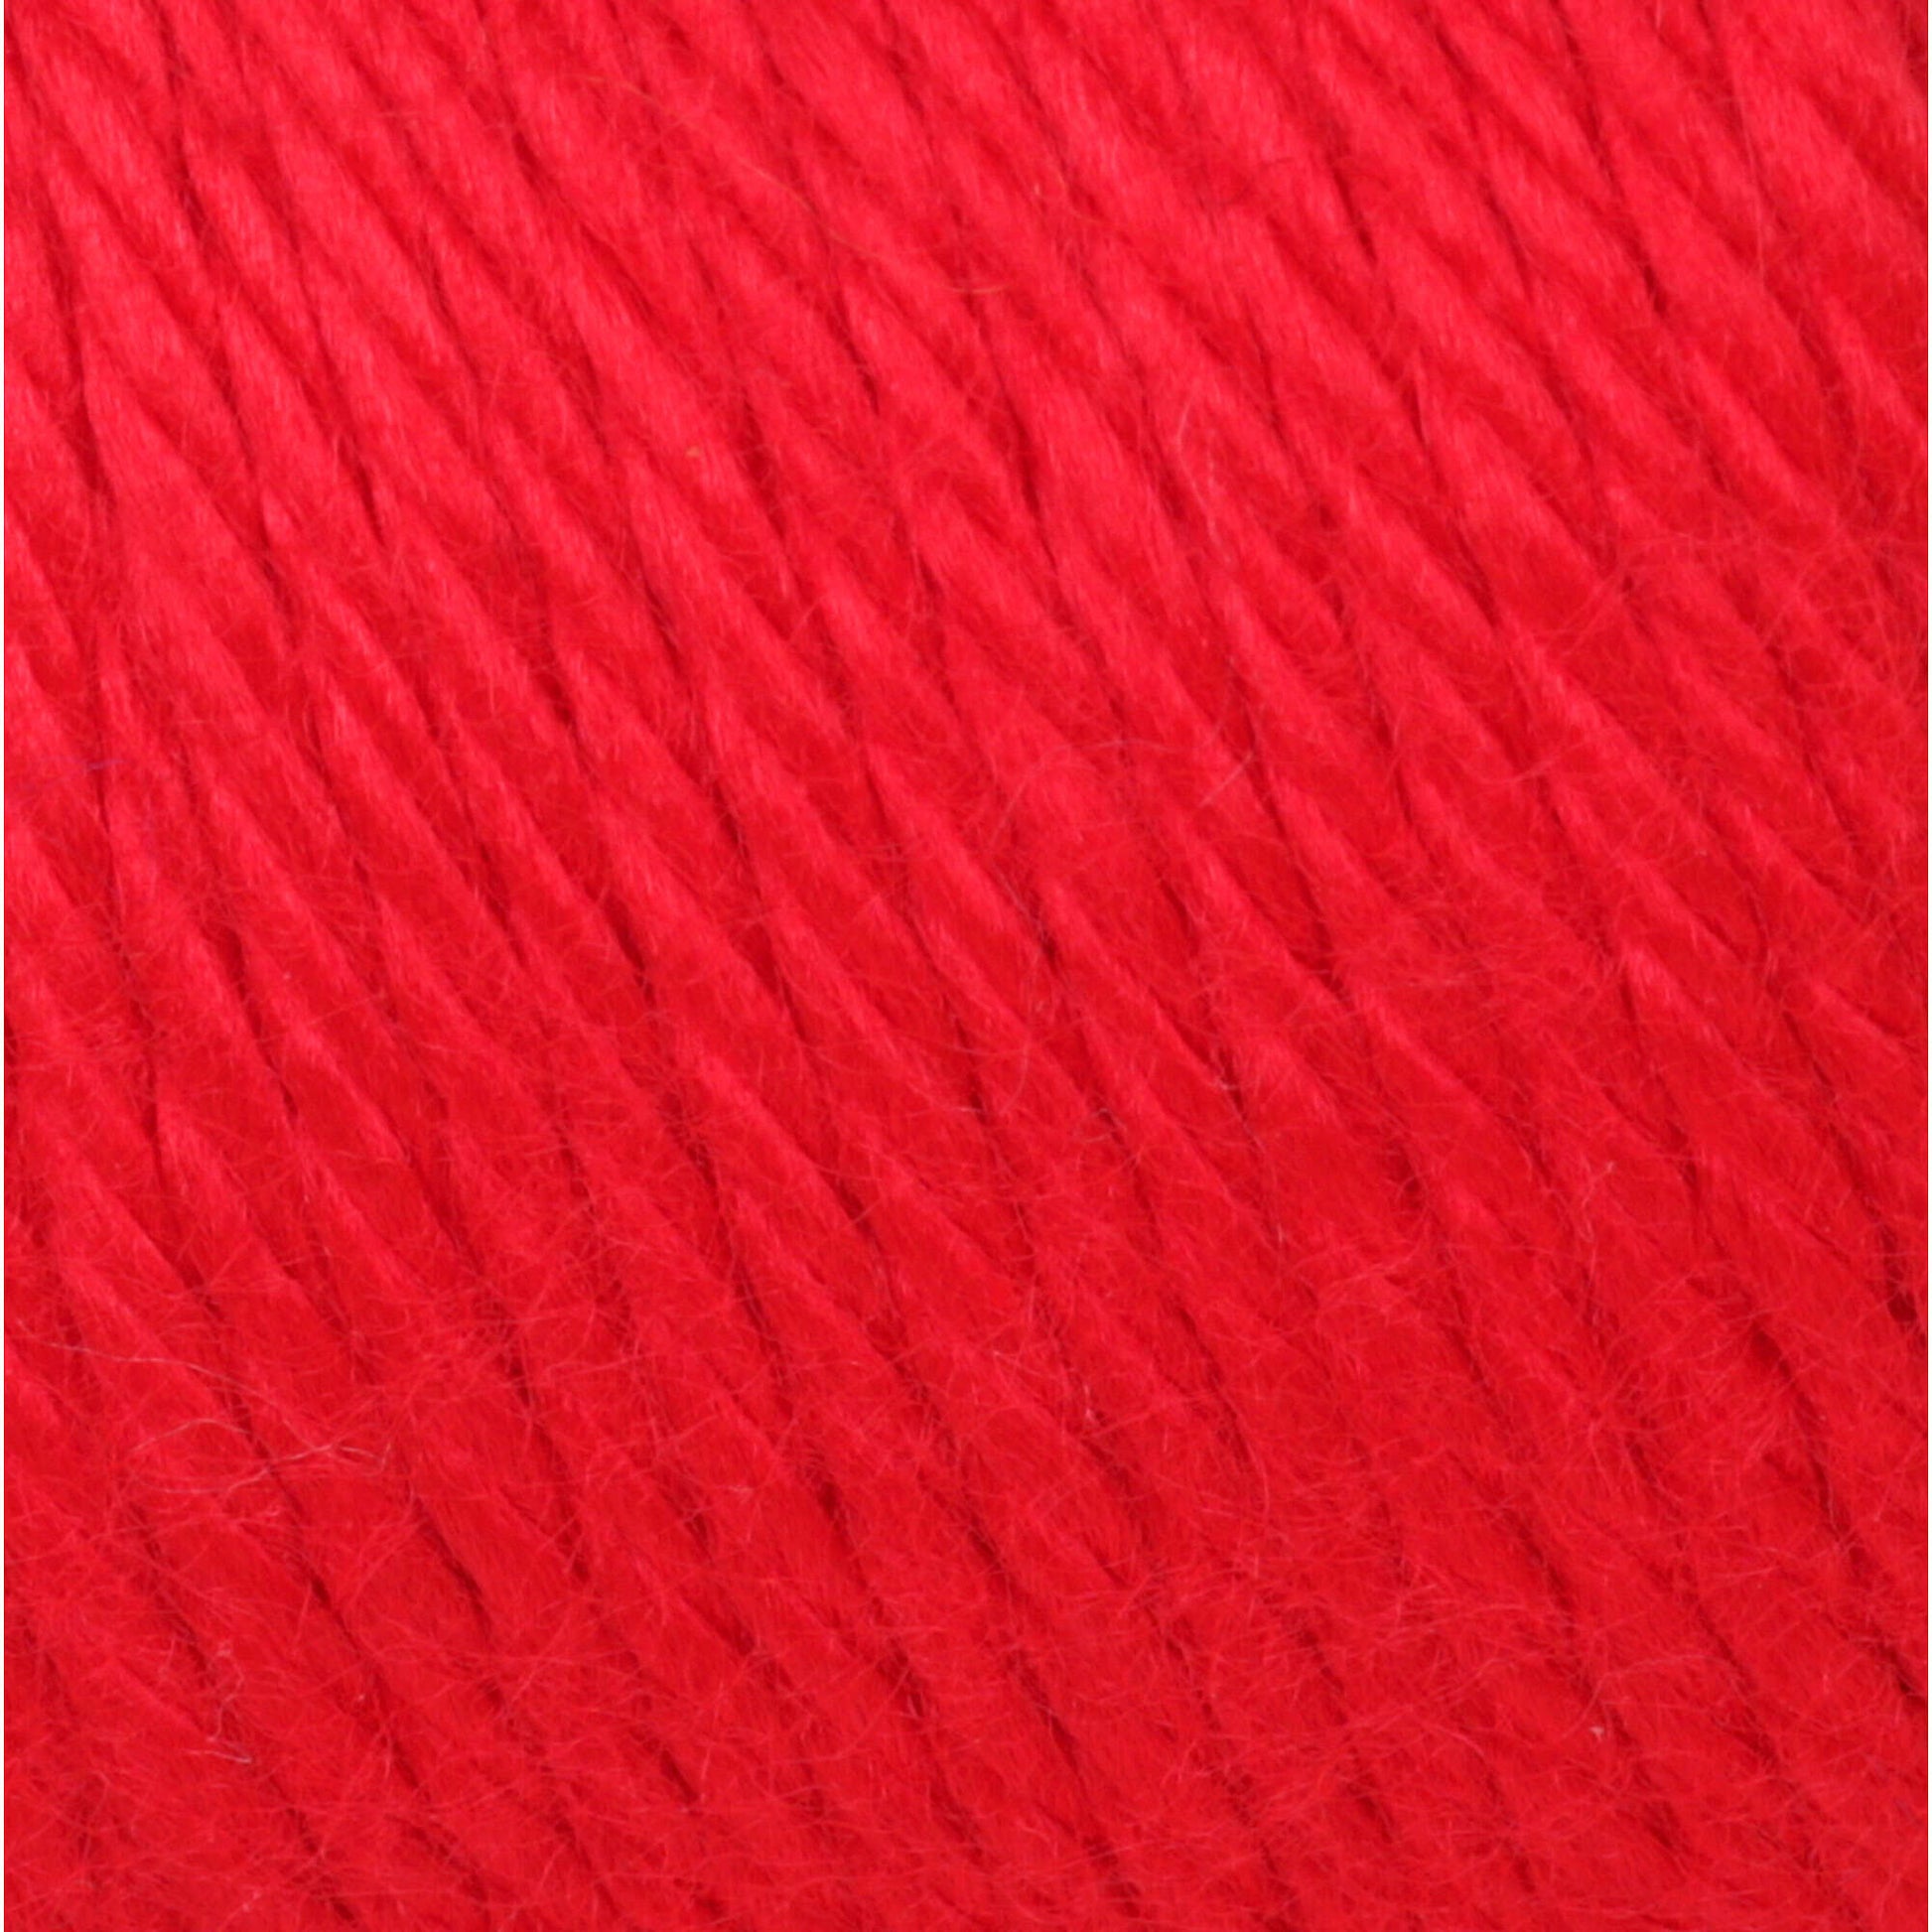 Caron Simply Soft Yarn Red